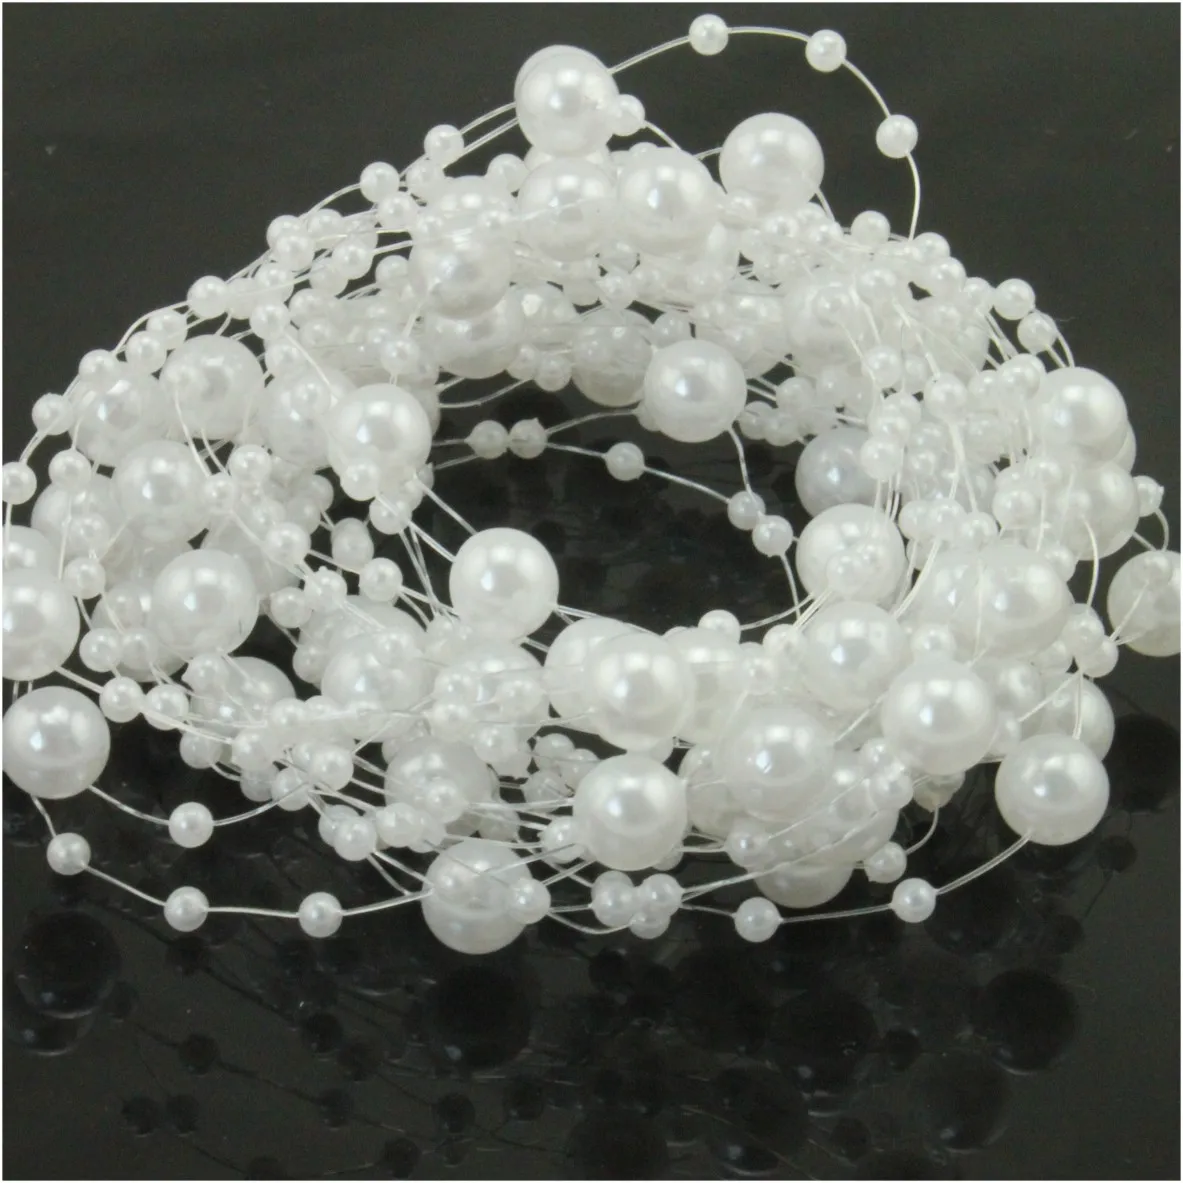 5M Fishing Line Artificial Pearl Beads Chain Wedding Garland Flower Decor Z0G6 